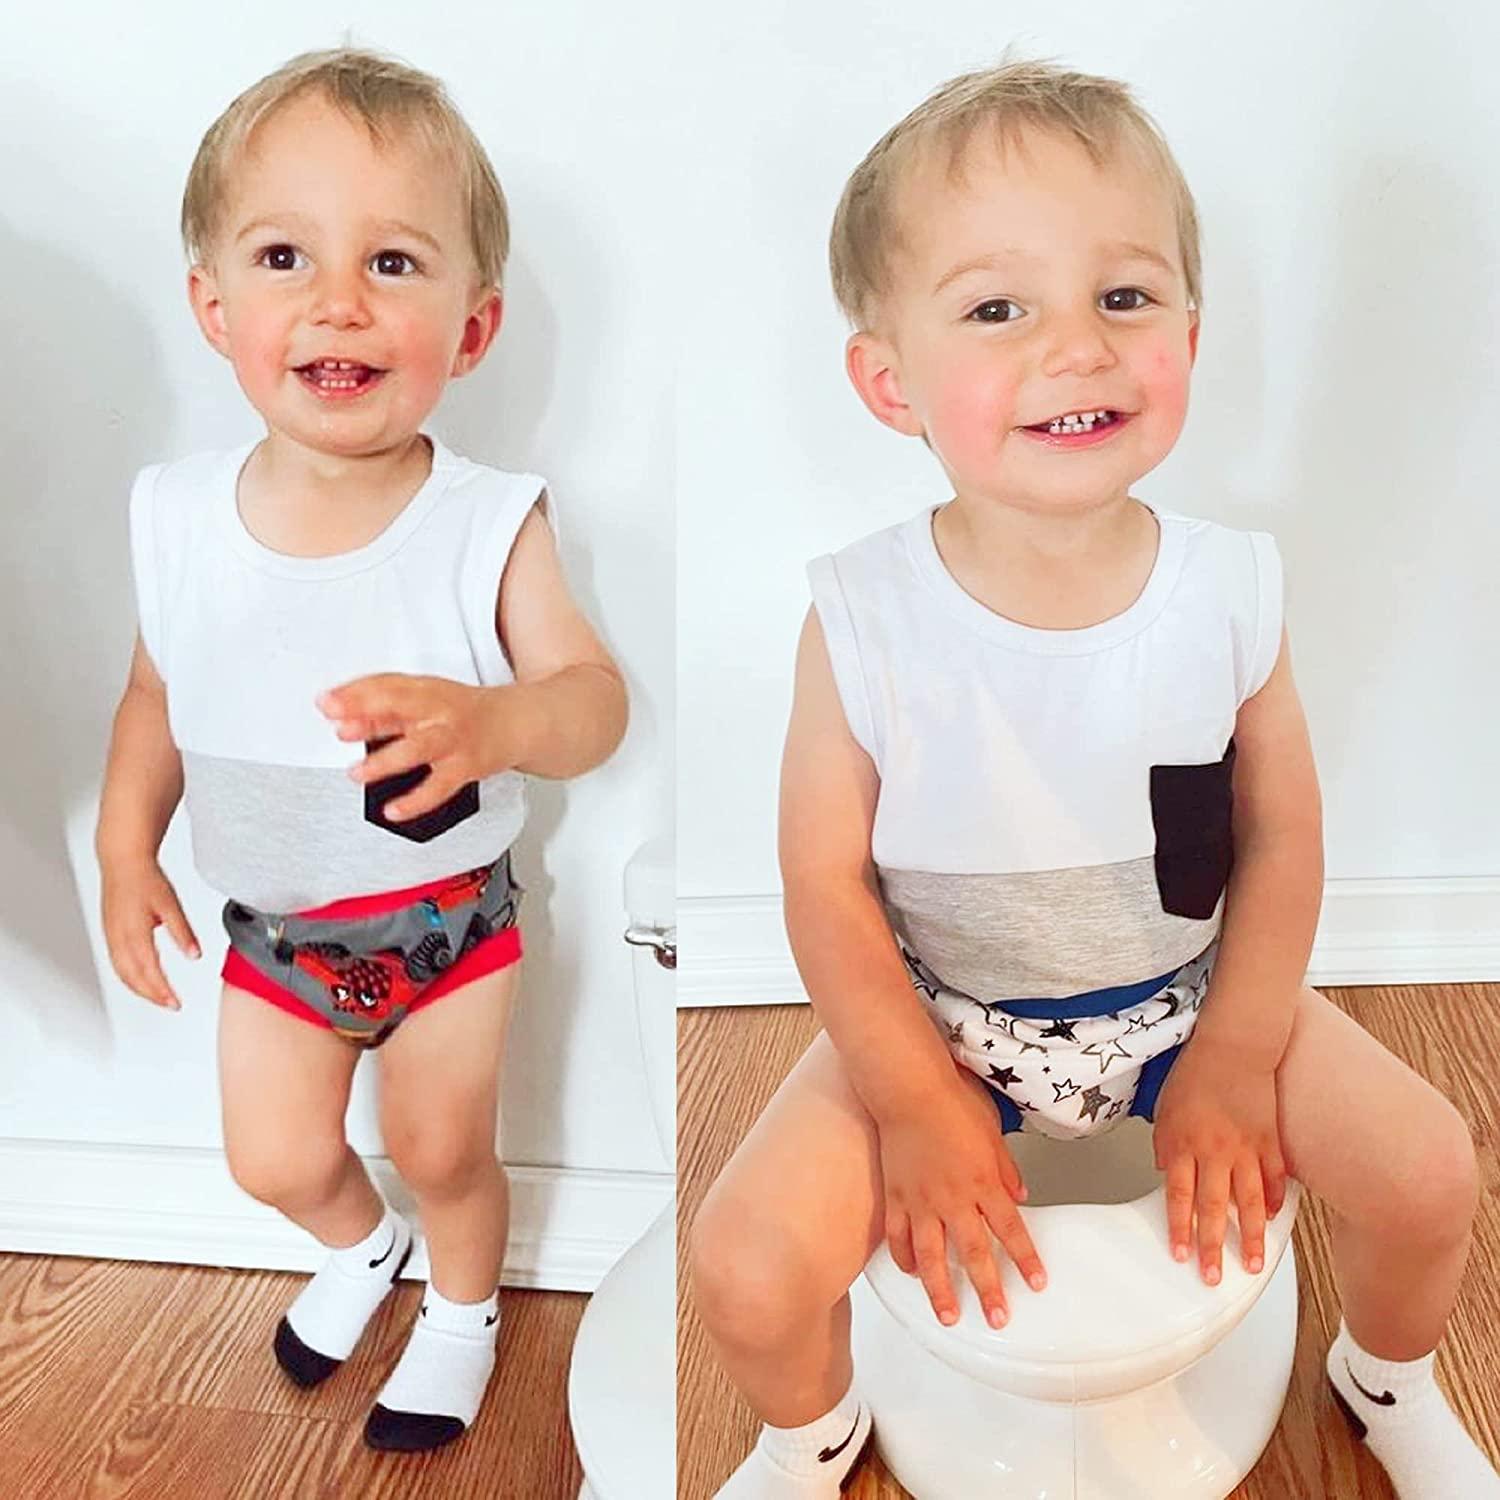 BIG ELEPHANT Toddler Potty Training Pants- 100% Cotton Baby Boys